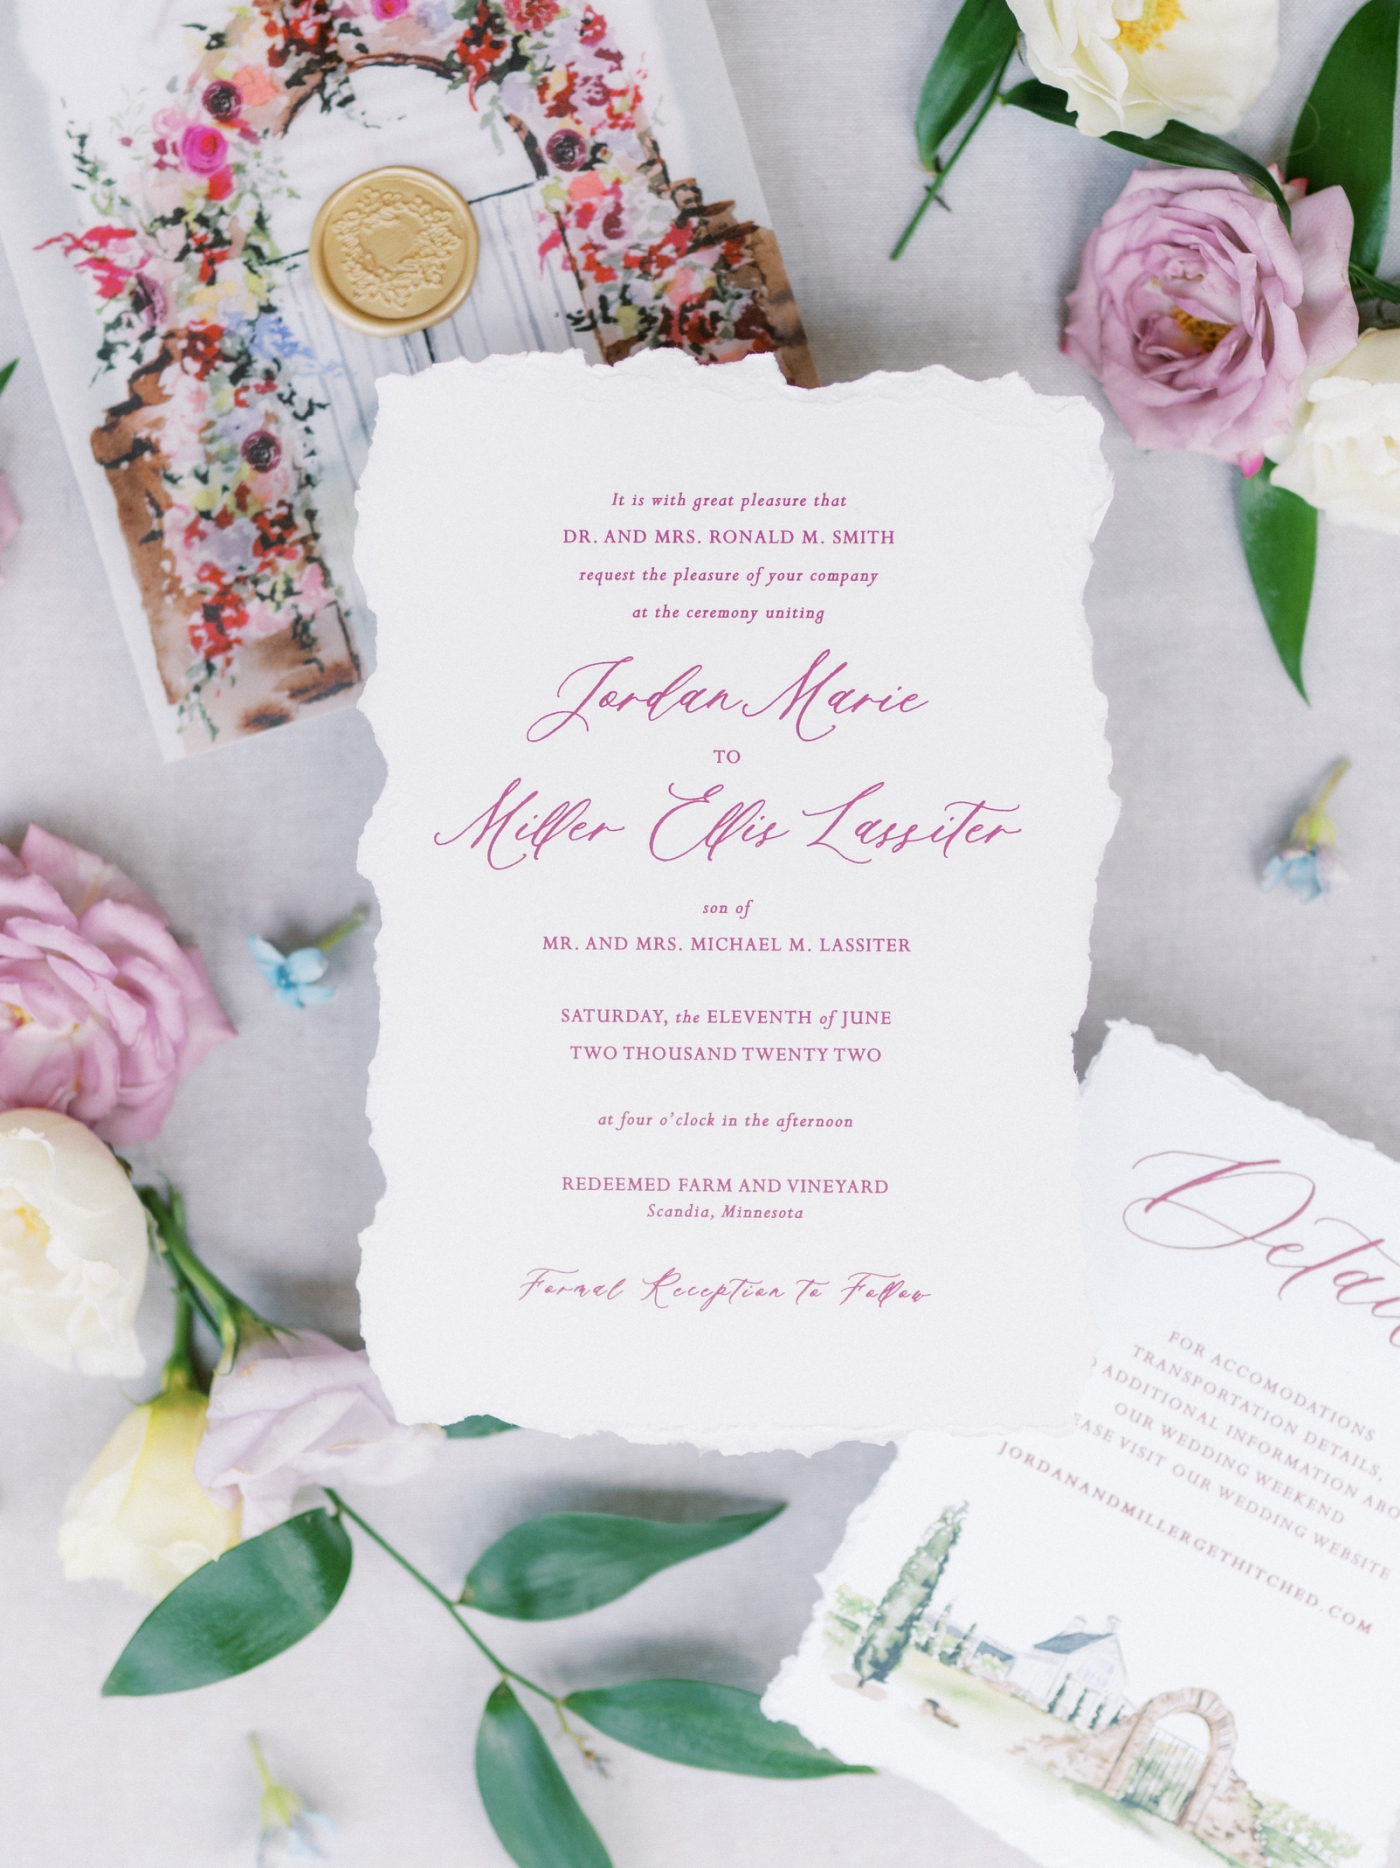 How much custom wedding invitations cost